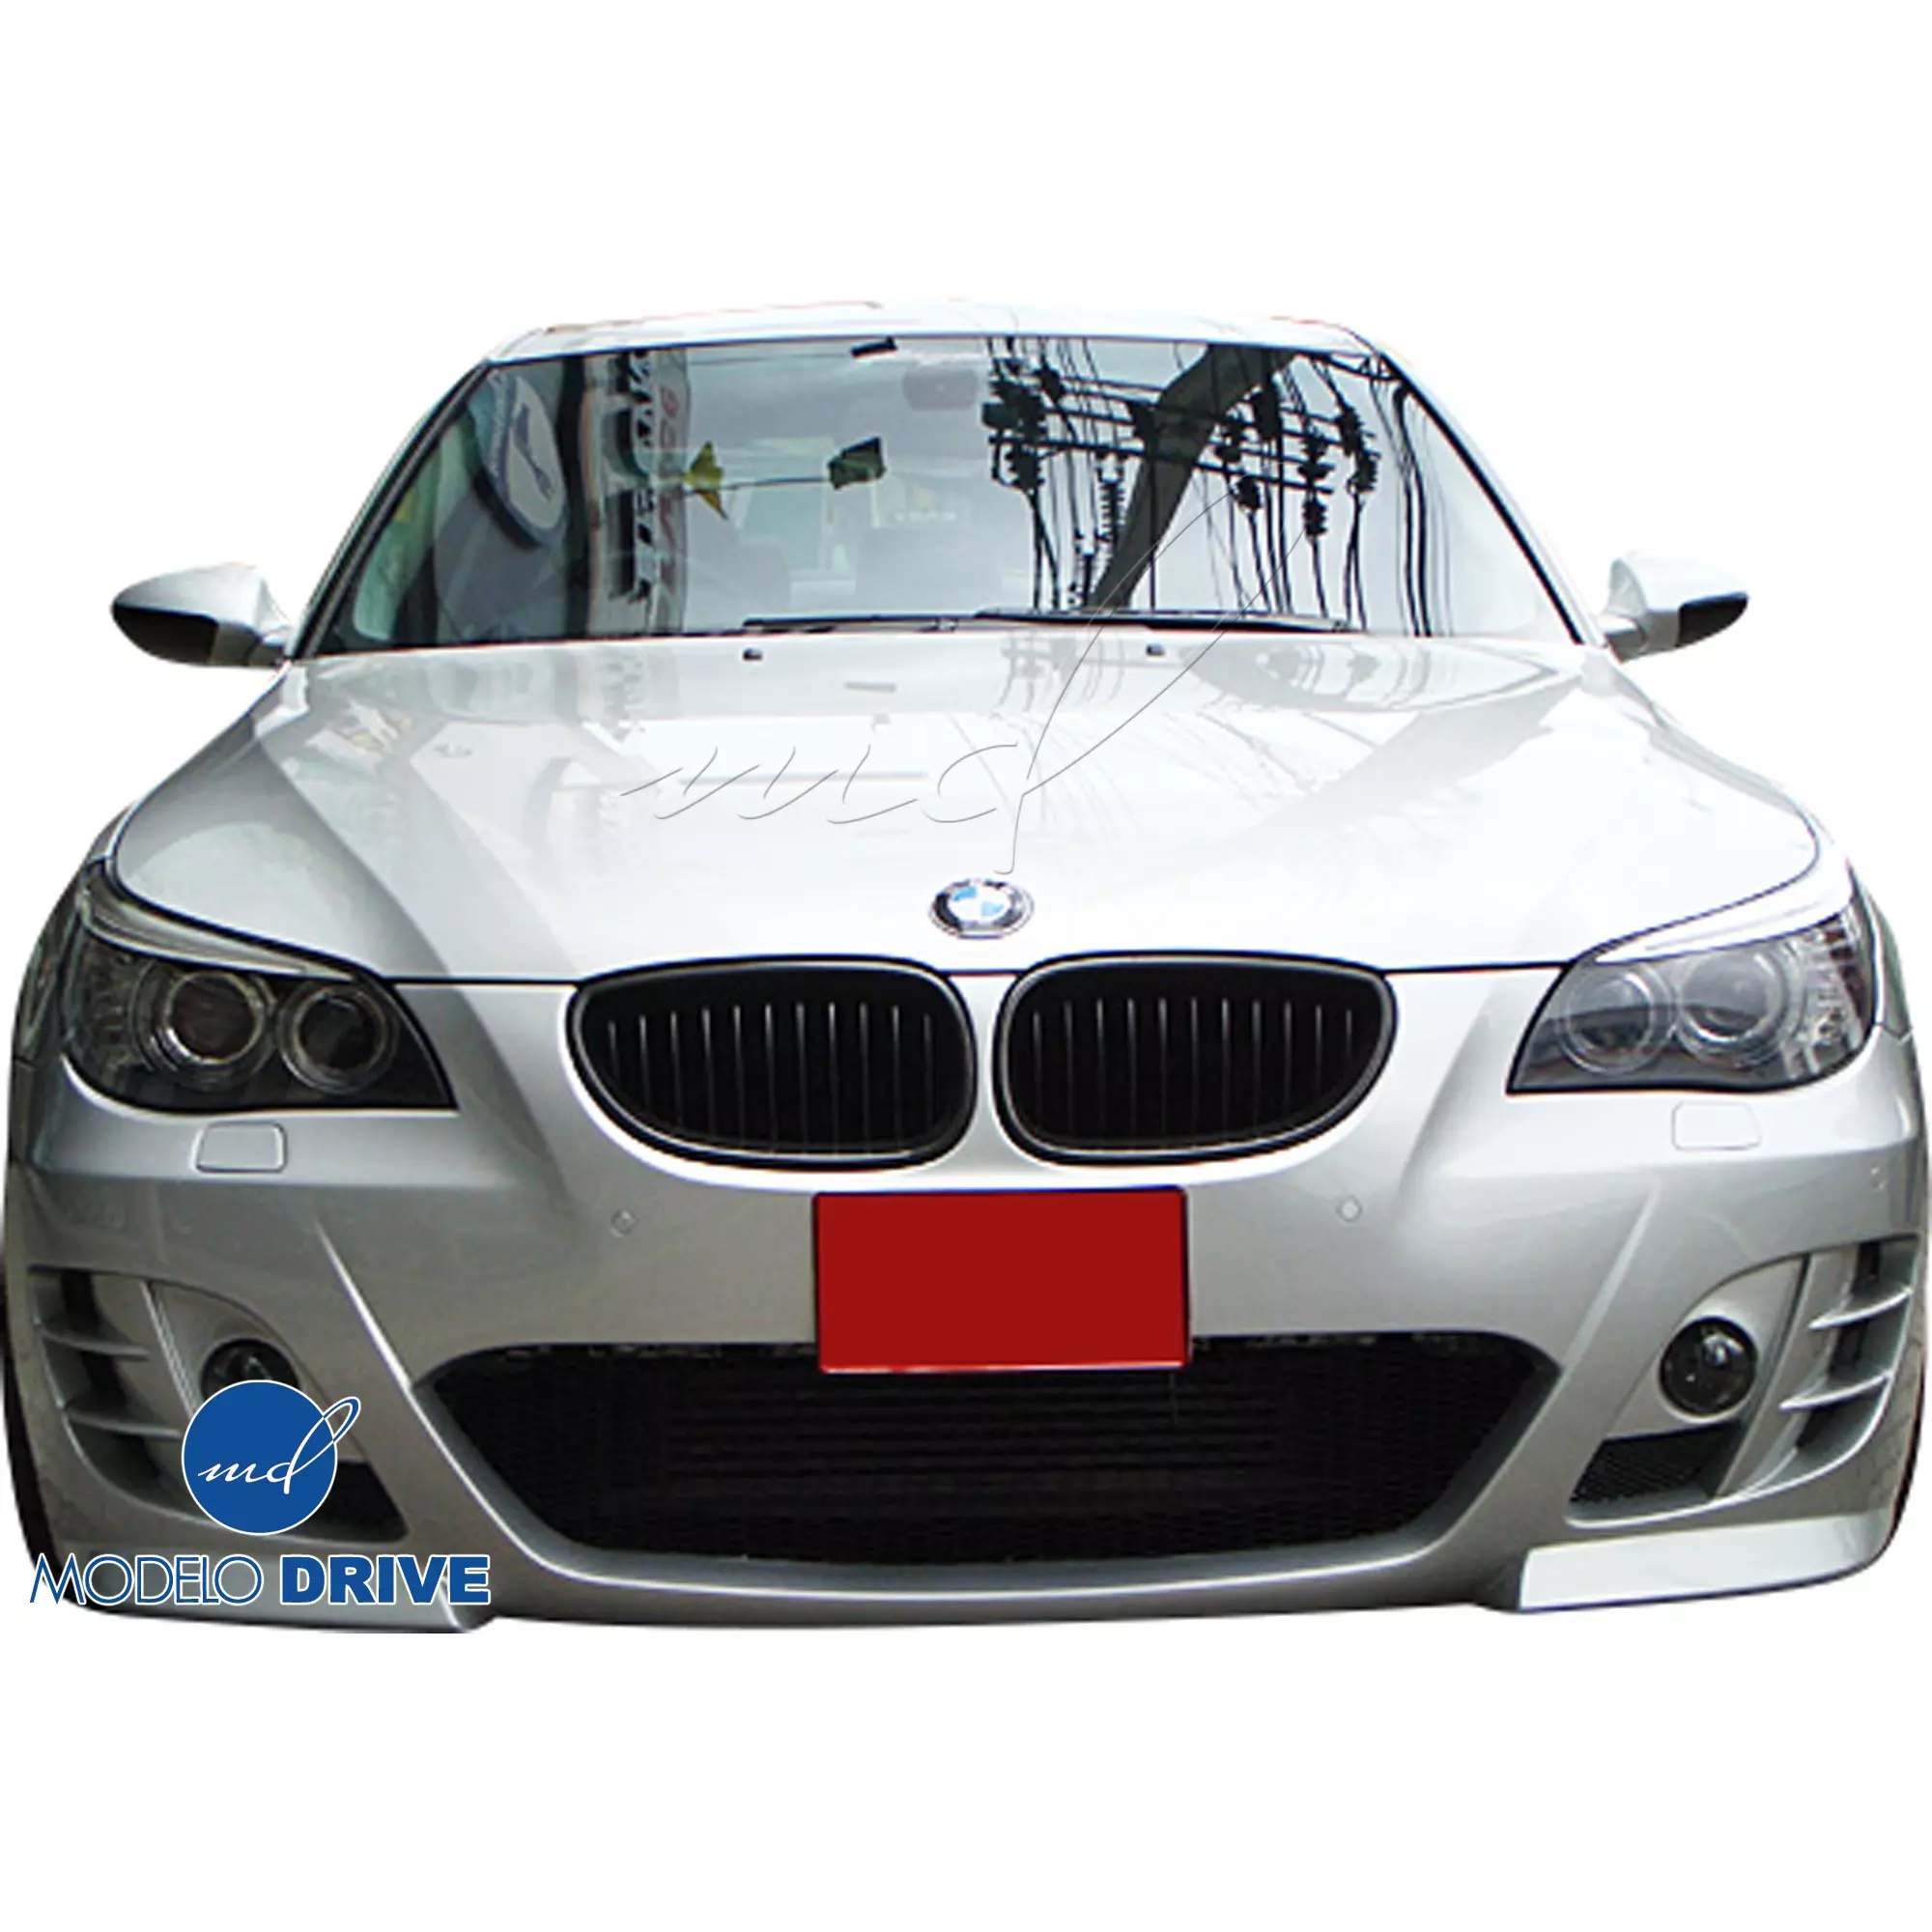 ModeloDrive FRP KERS Body Kit 4pc > BMW 3-Series E60 2004-2010 > 4dr - Image 4